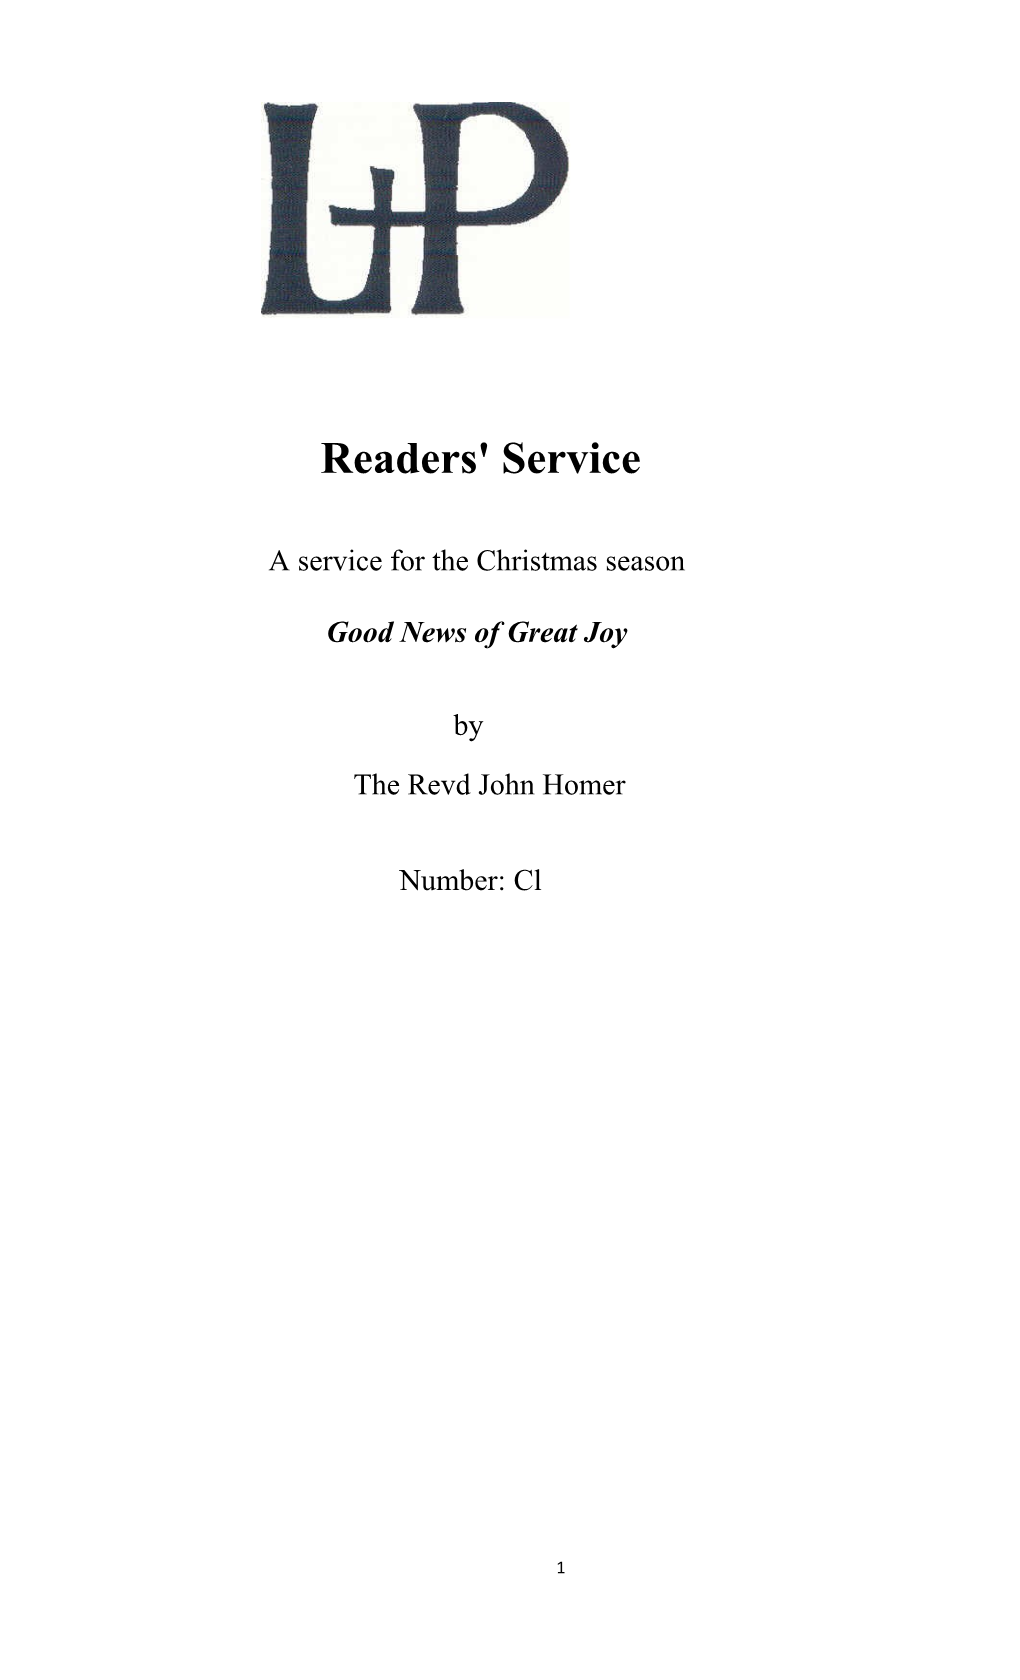 A Service for the Christmas Season